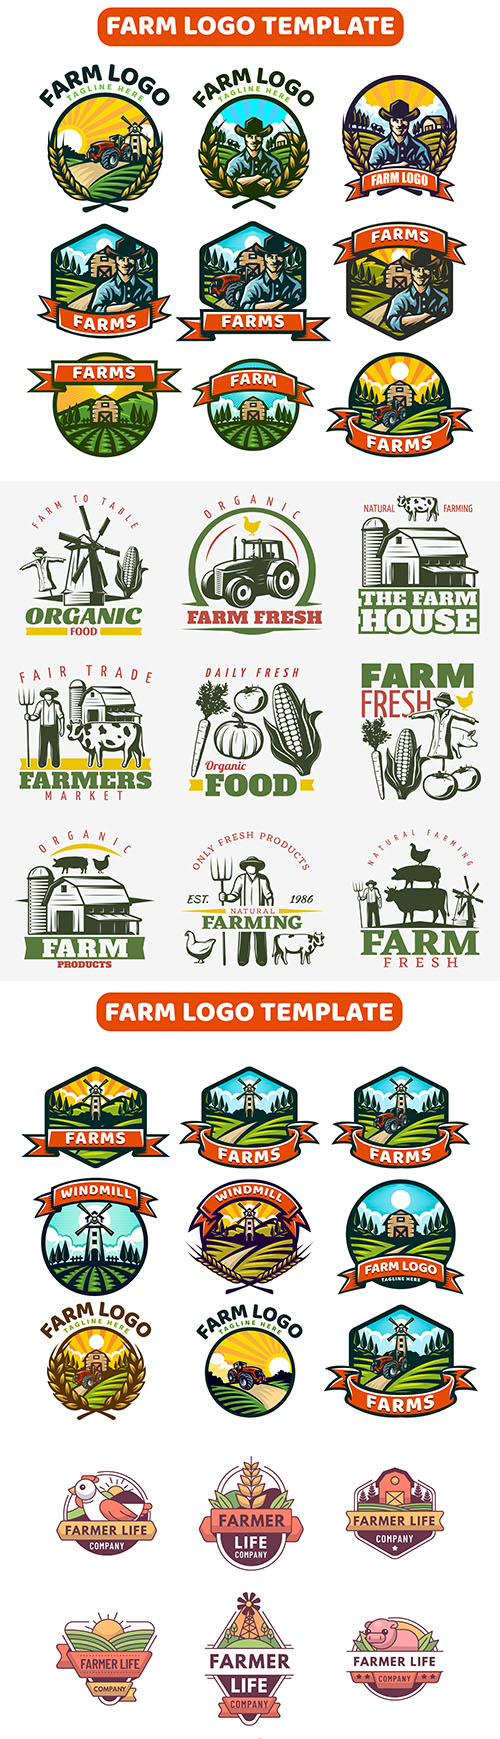 Farm logos design brand Name Company corporate
